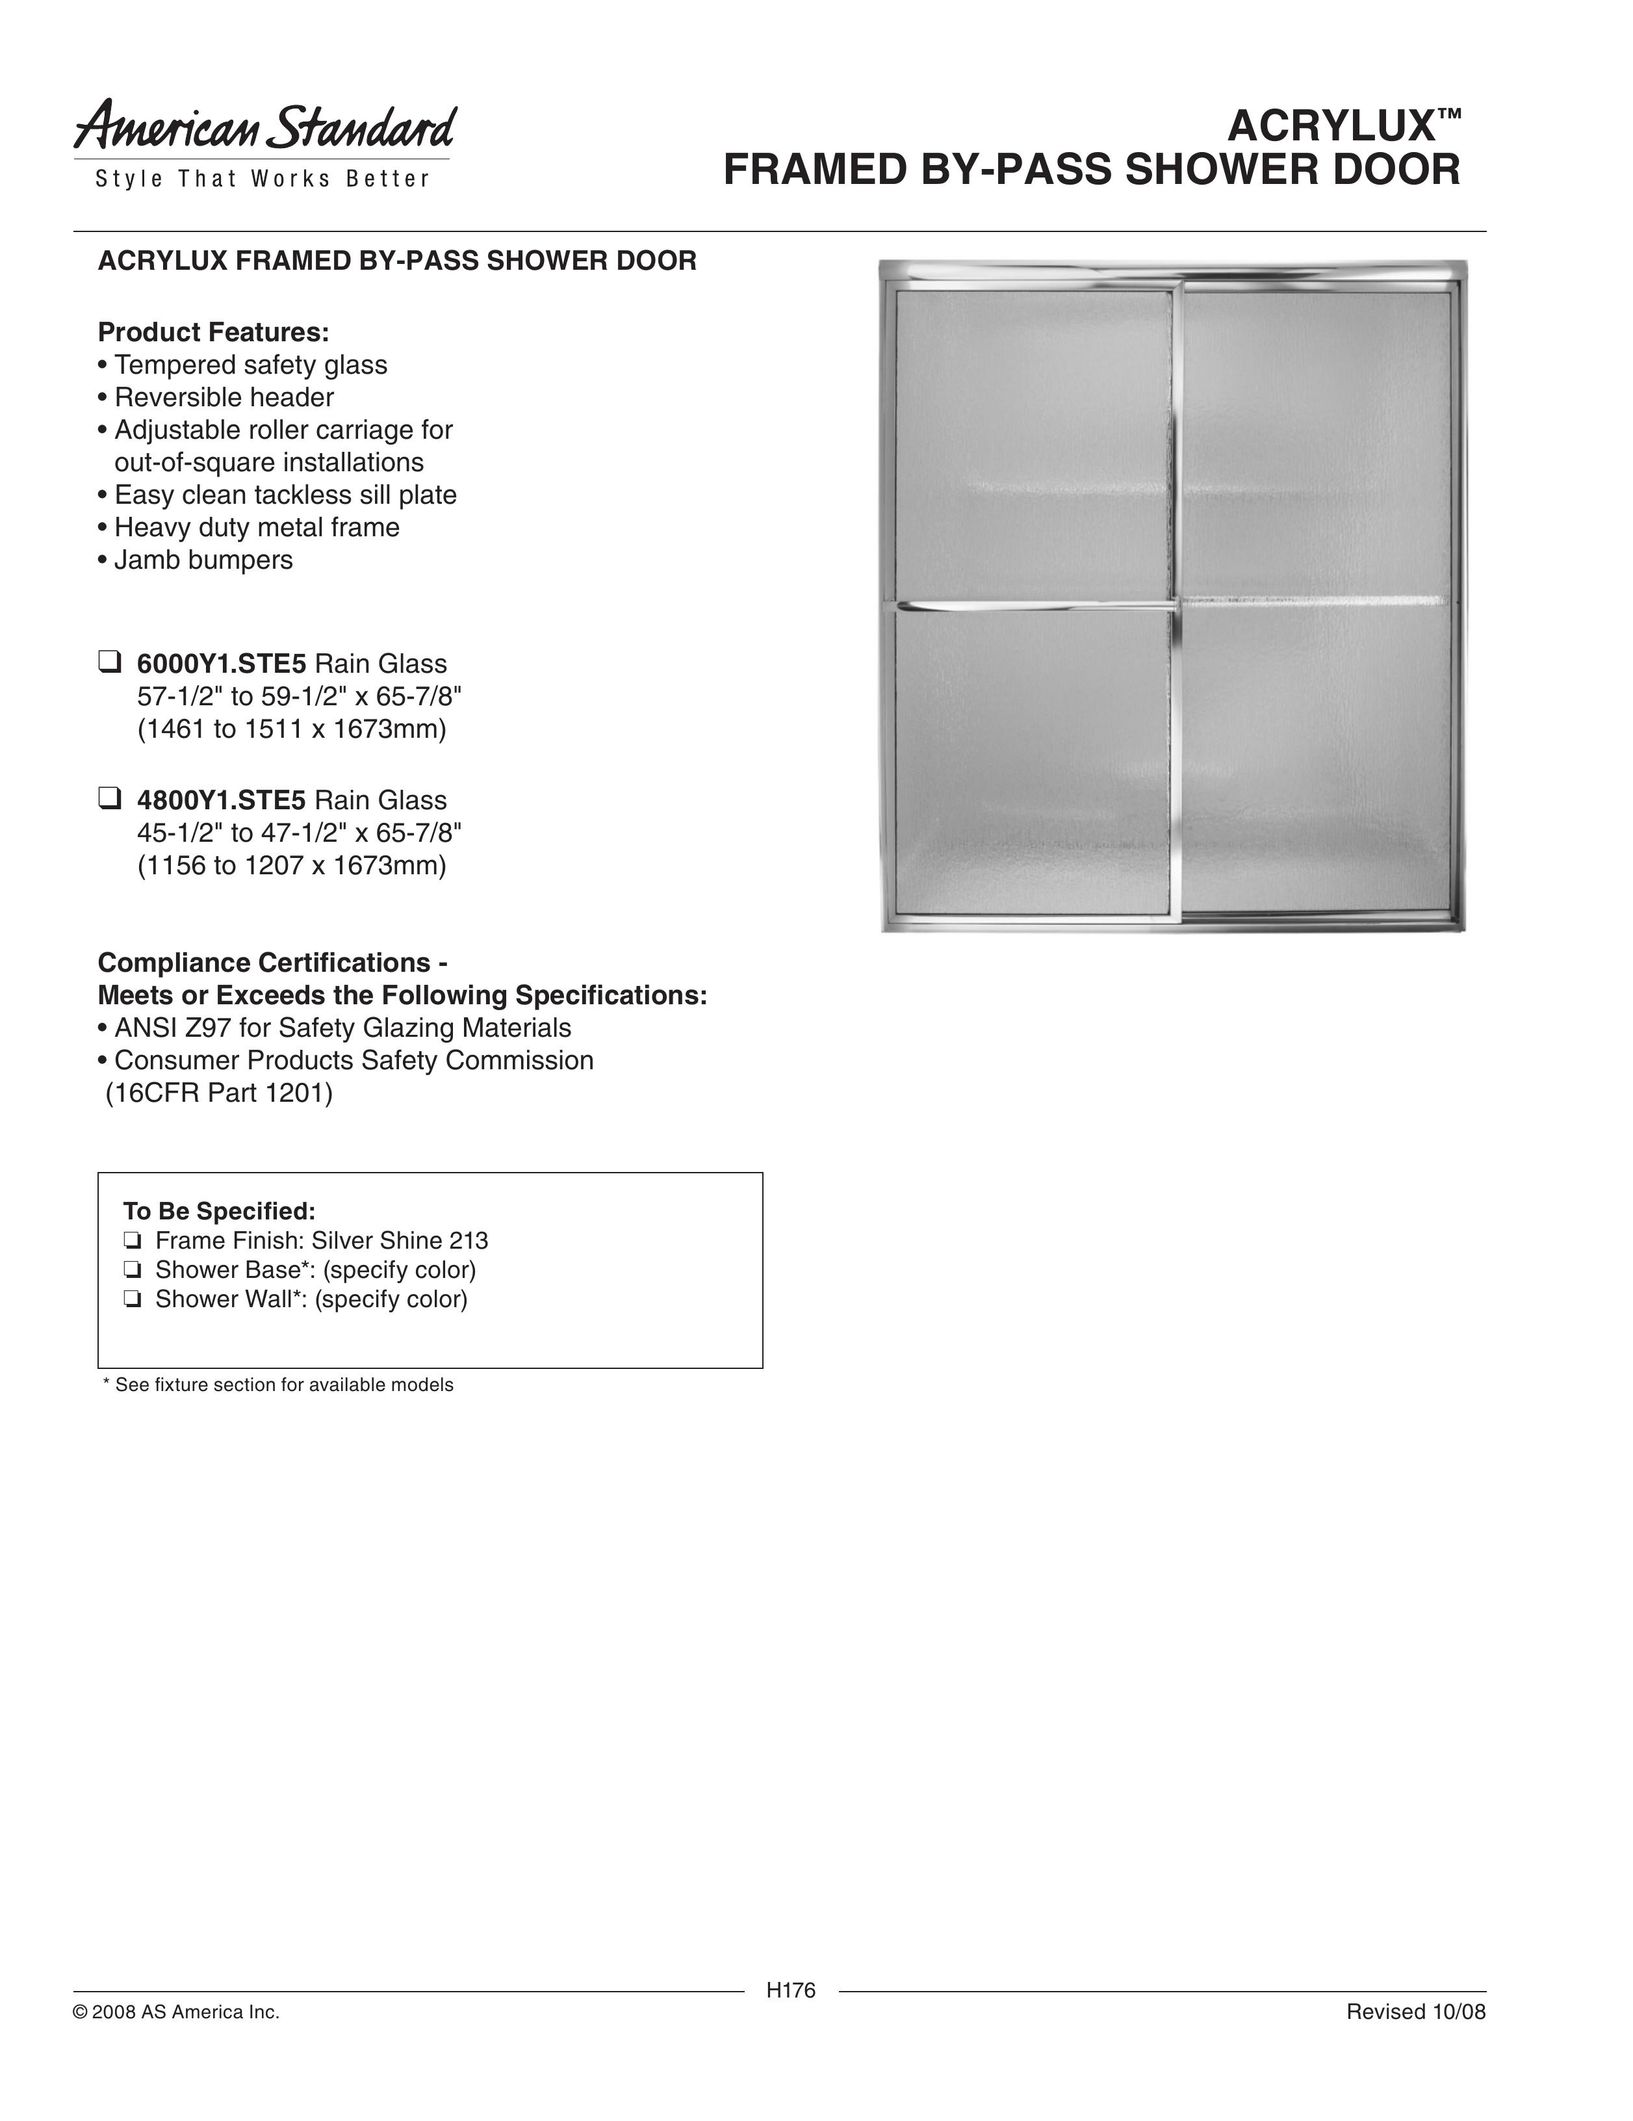 American Standard Framed By-Pass Shower Door User Manual